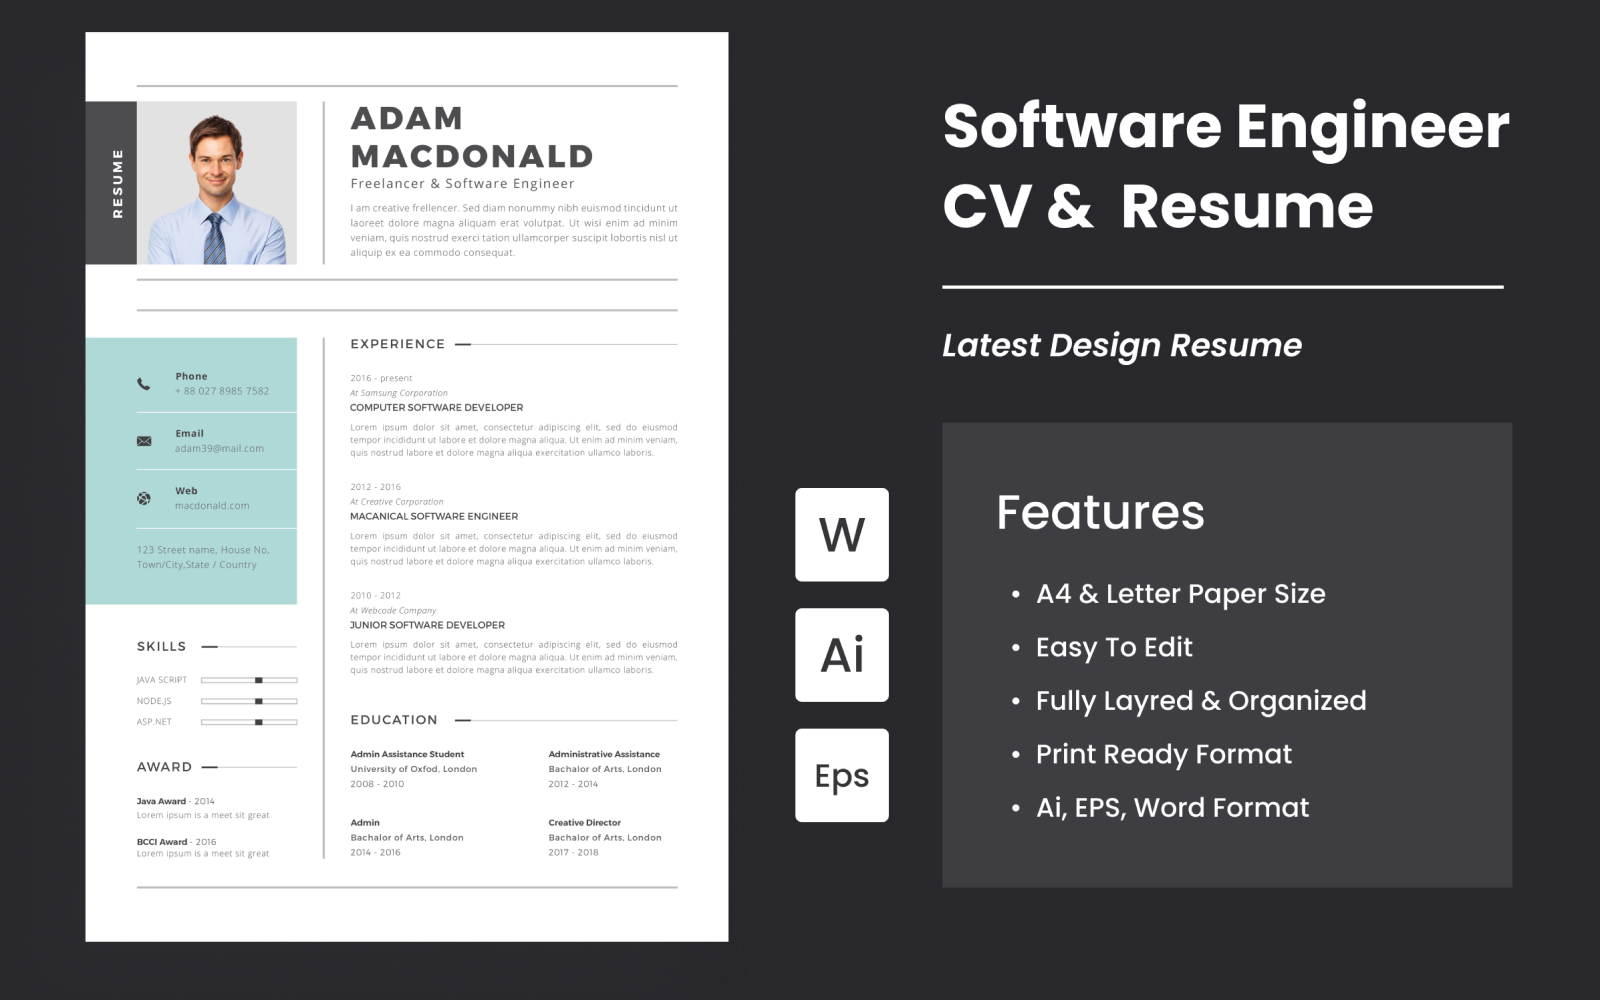 Software Engineer CV & Resume